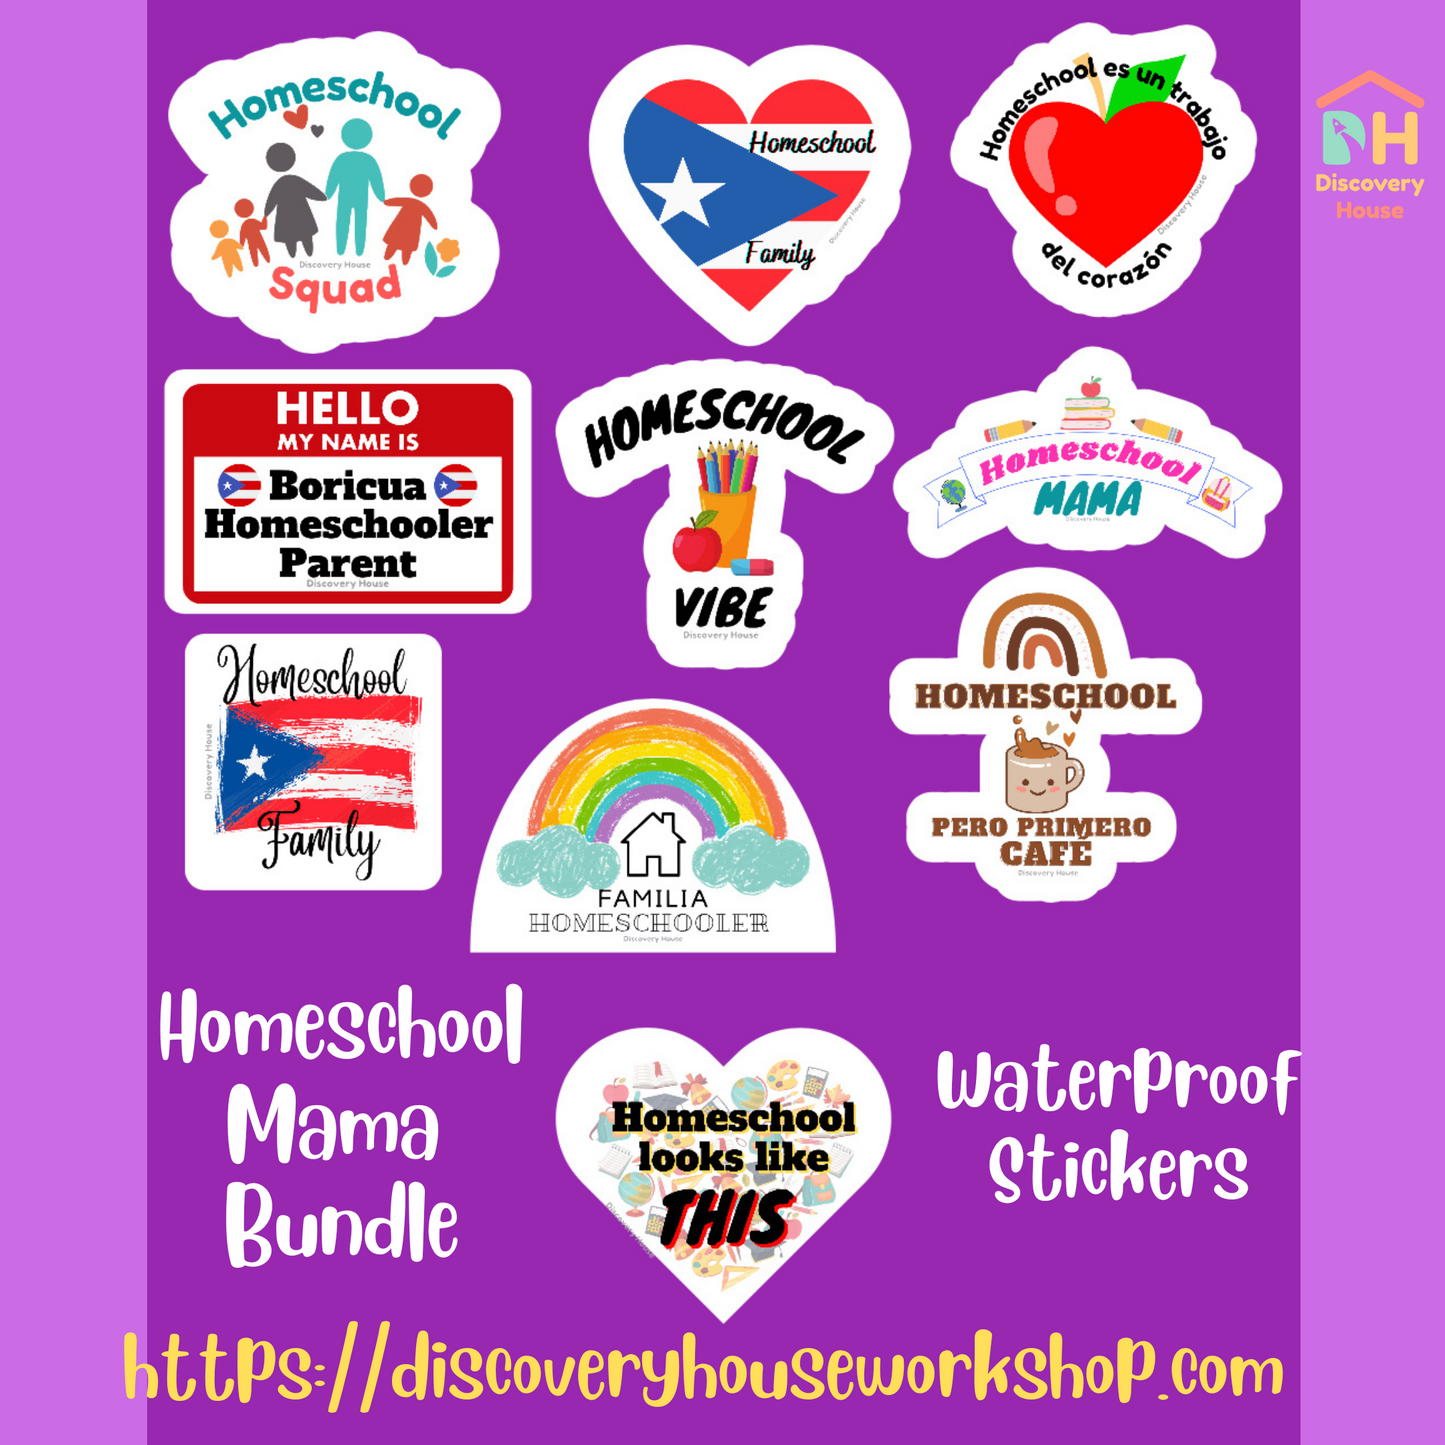 Homeschool Mama Stickers